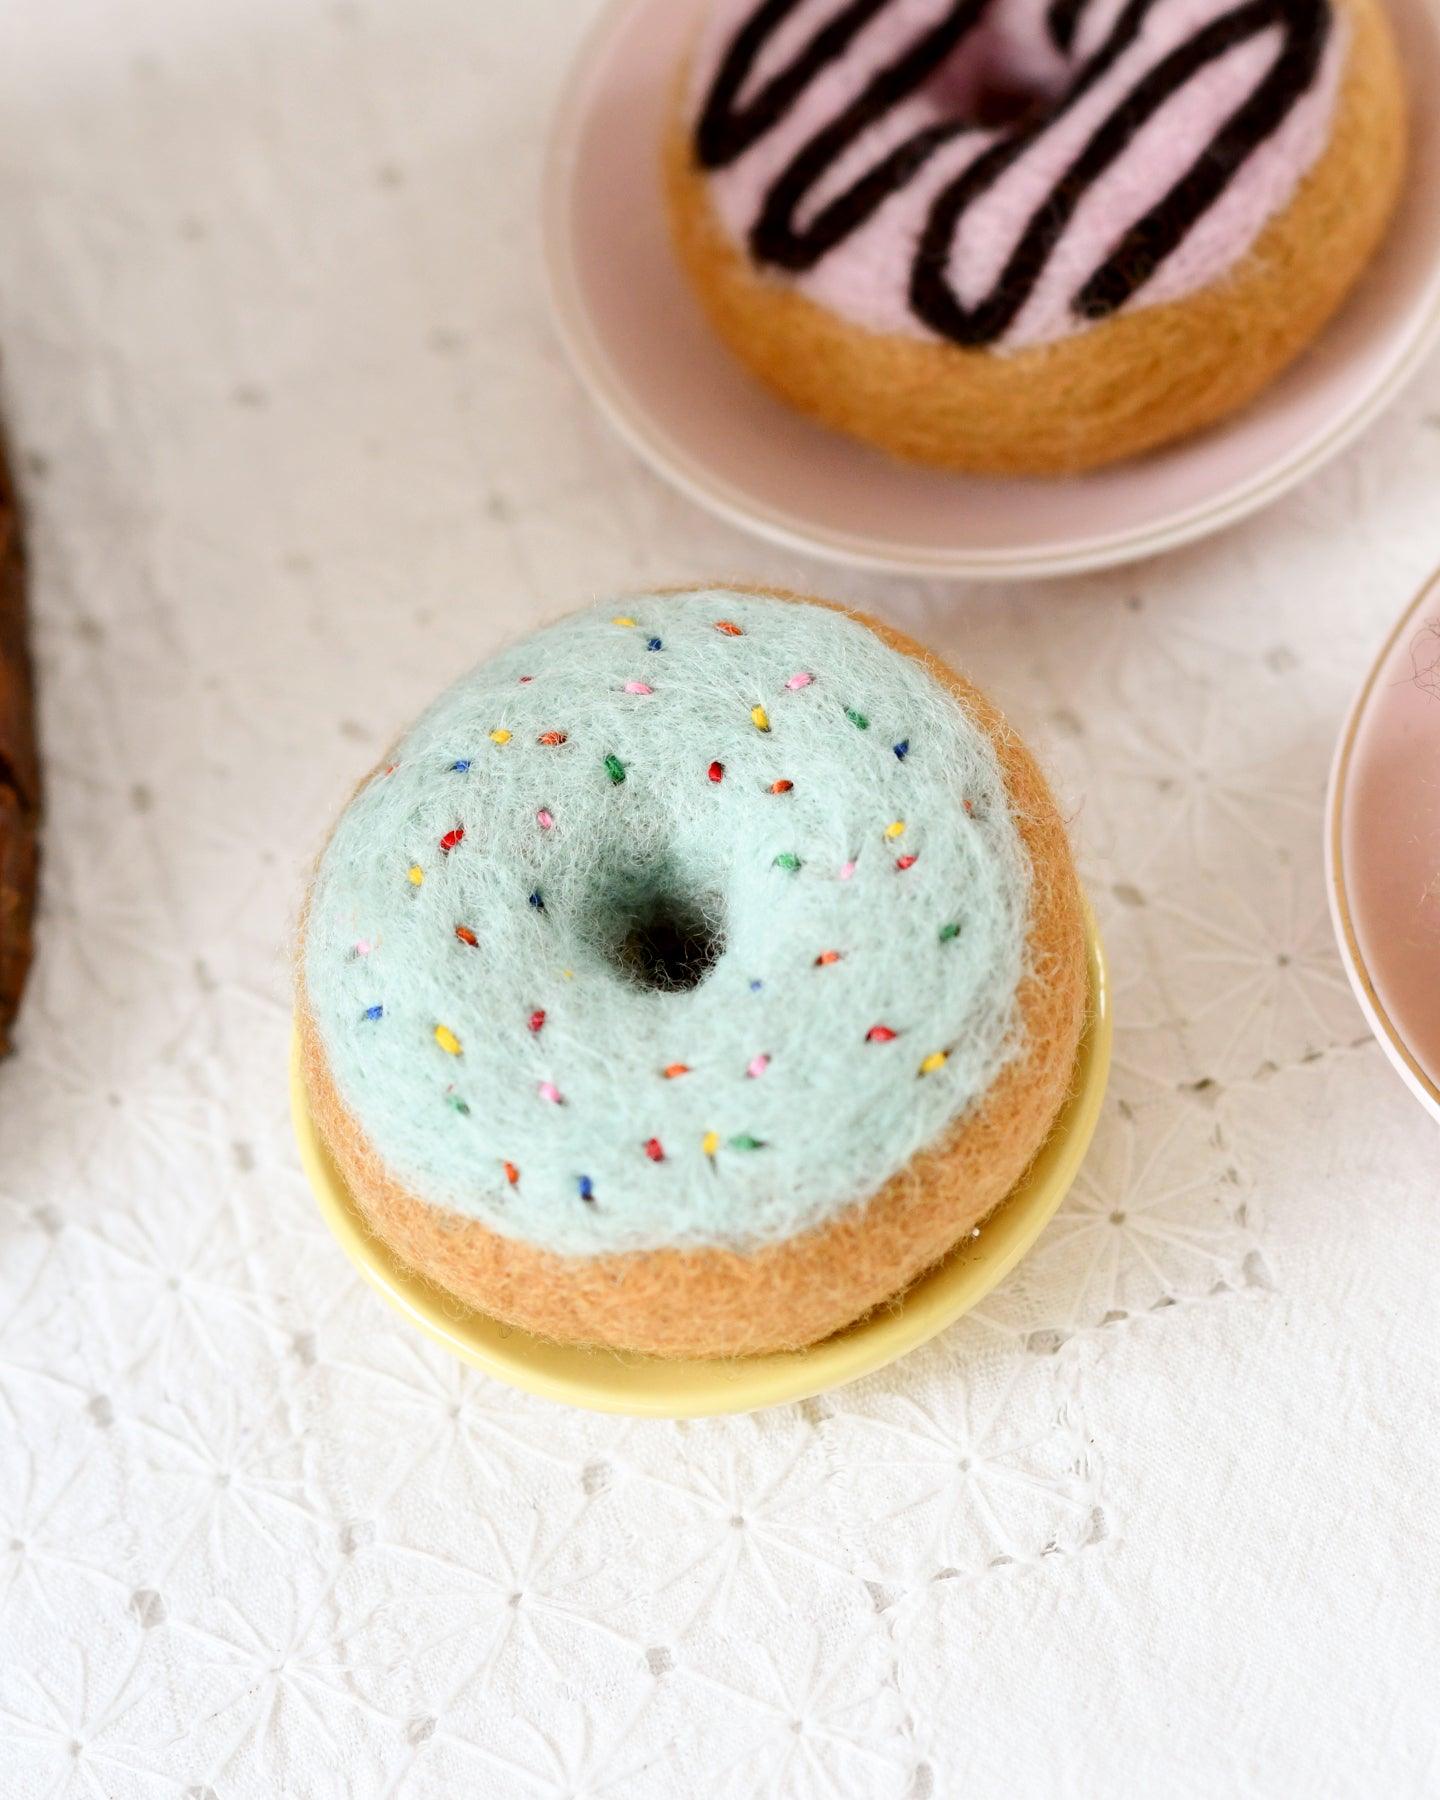 Felt Doughnut (Donut) with Blue Vanilla Frosting and Rainbow Sprinkles - Tara Treasures